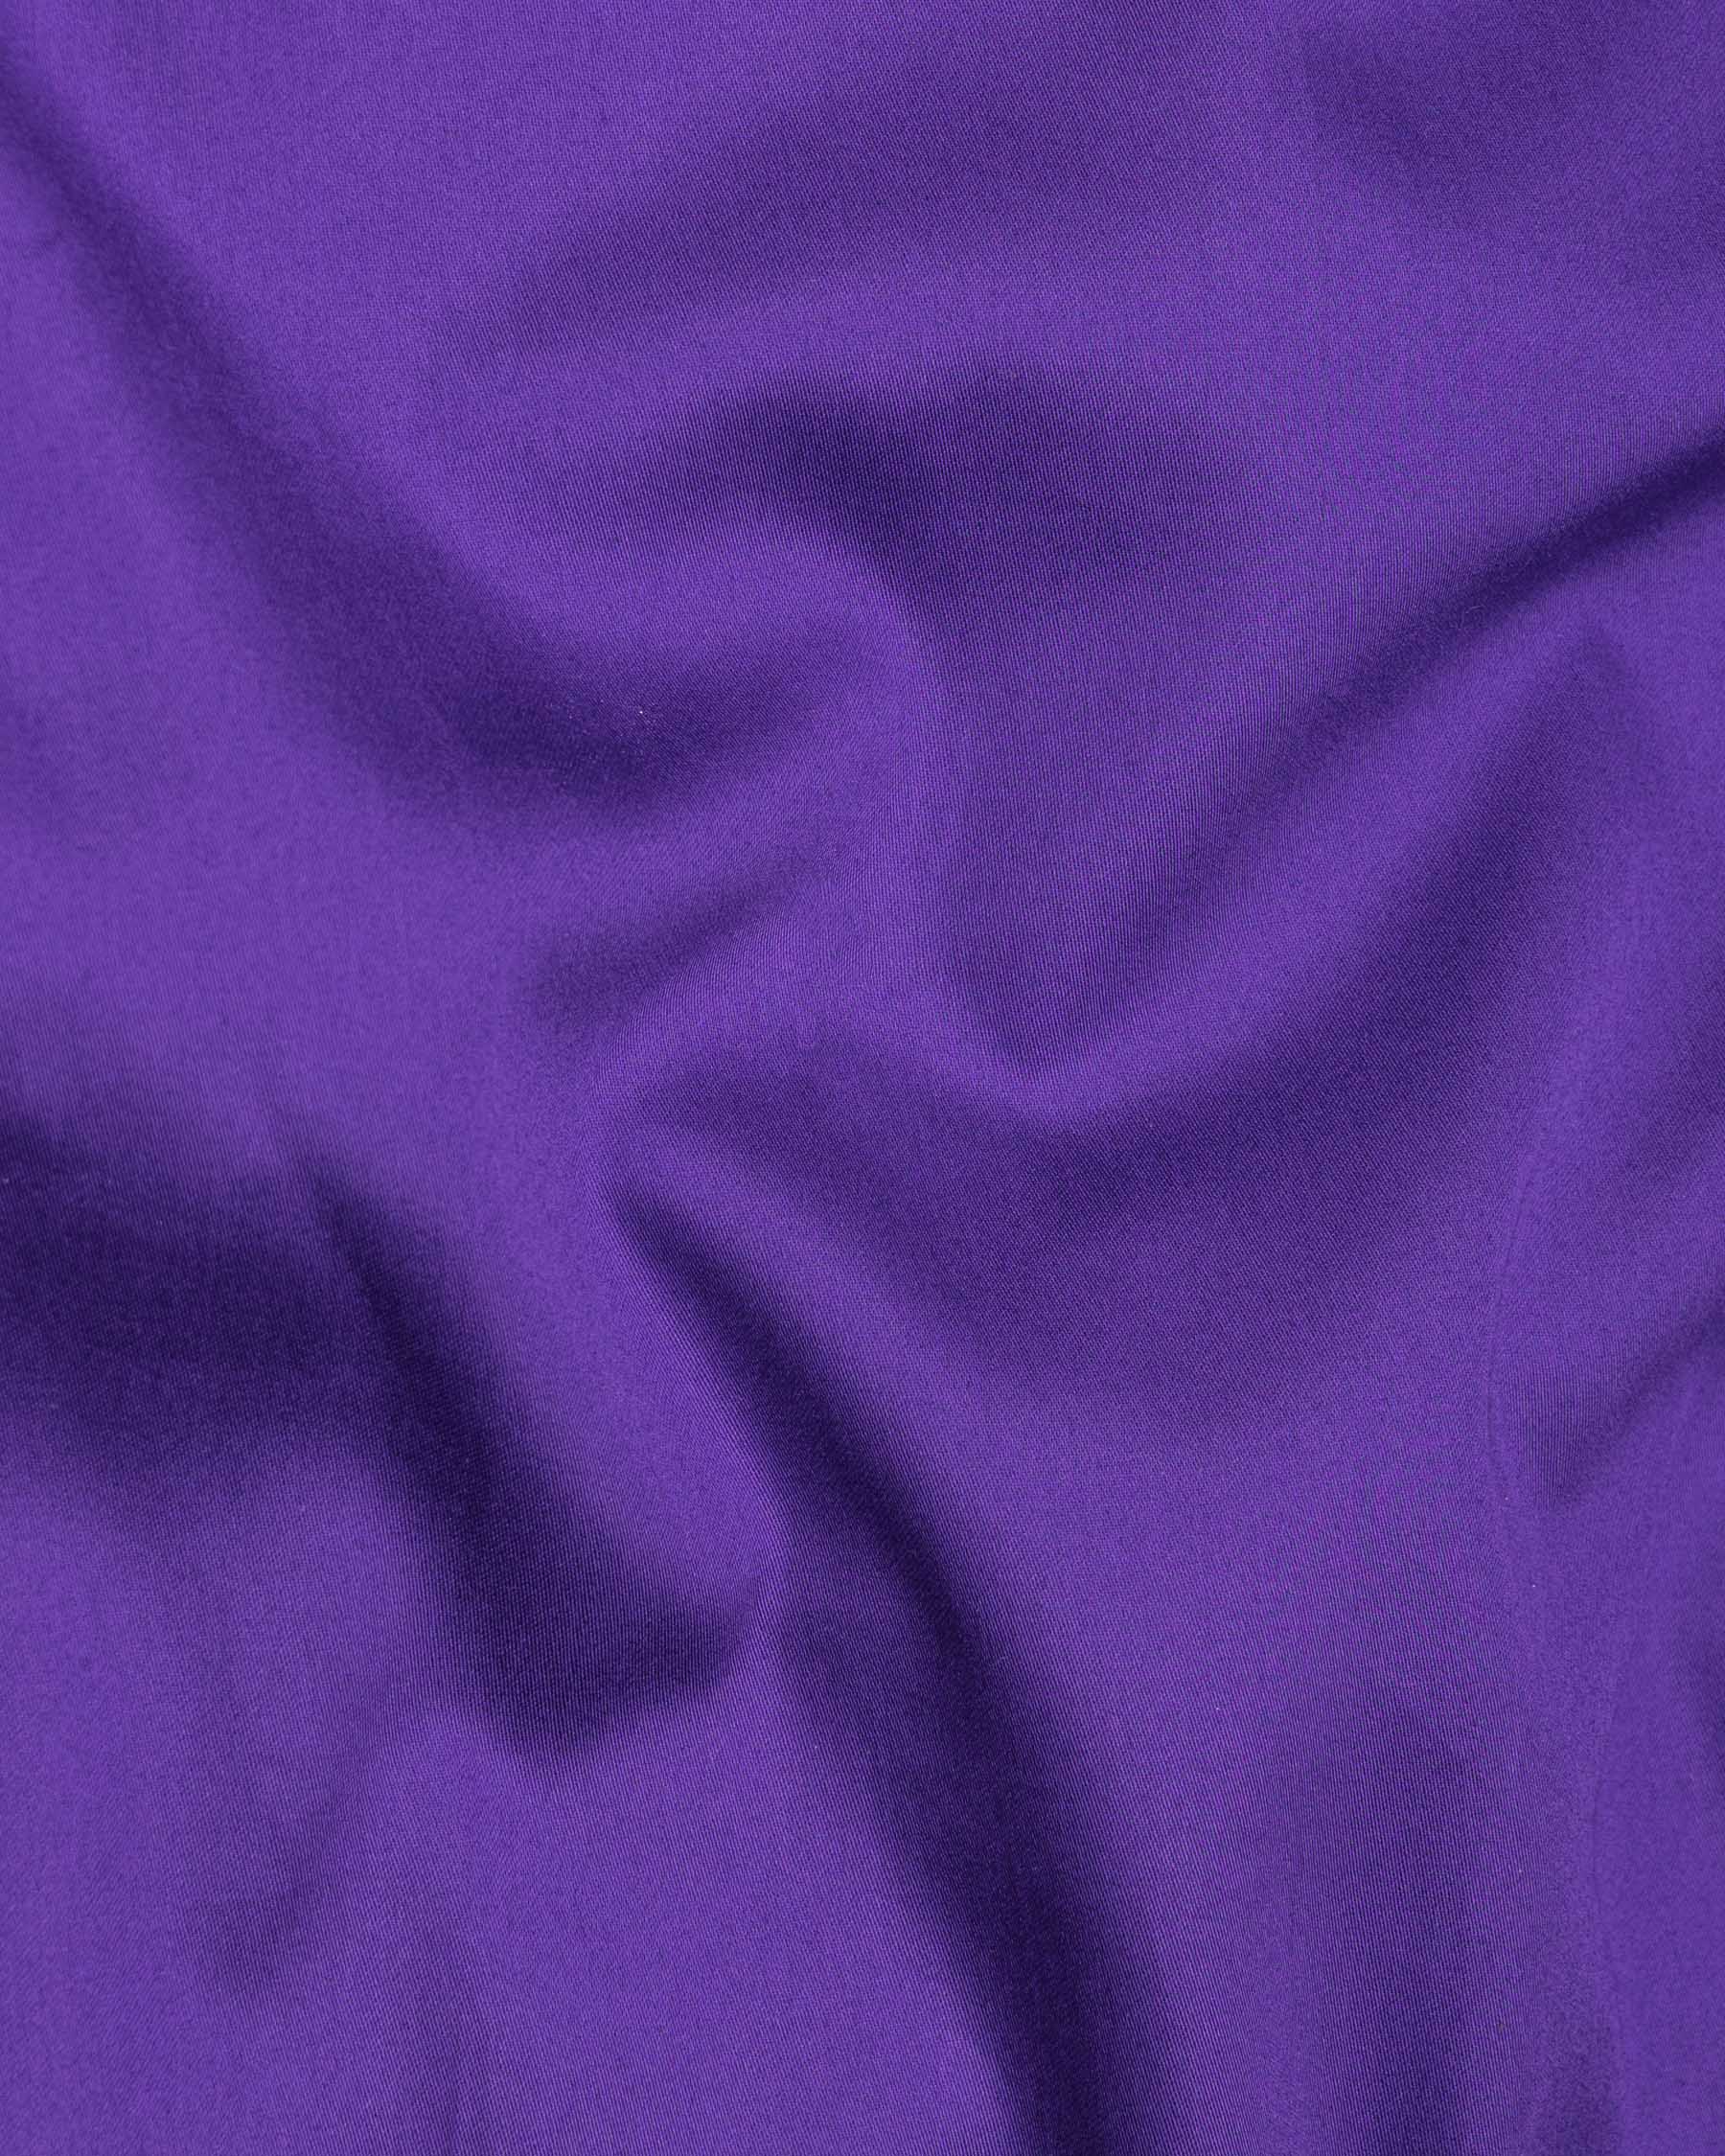 Windsor Purple Super Soft Premium Cotton Kurta Shirt 6422-KS-38, 6422-KS-H-38, 6422-KS-39, 6422-KS-H-39, 6422-KS-40, 6422-KS-H-40, 6422-KS-42, 6422-KS-H-42, 6422-KS-44, 6422-KS-H-44, 6422-KS-46, 6422-KS-H-46, 6422-KS-48, 6422-KS-H-48, 6422-KS-50, 6422-KS-H-50, 6422-KS-52, 6422-KS-H-52